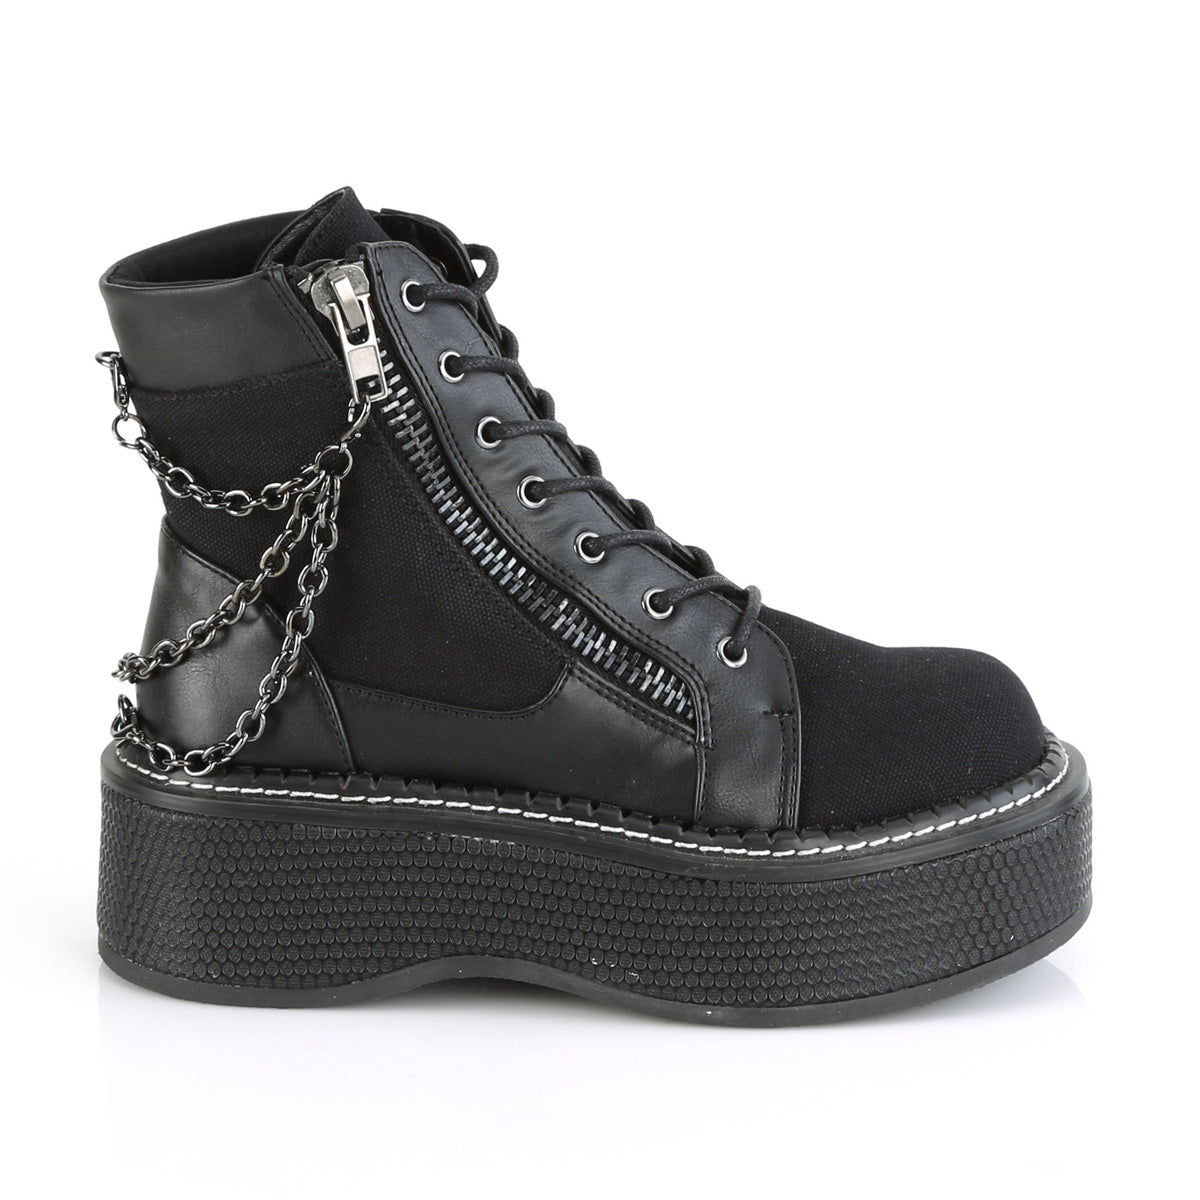 EMILY-114 Demonia Black Canvas-Vegan Leather Women's Ankle Boots [Demonia Cult Alternative Footwear]